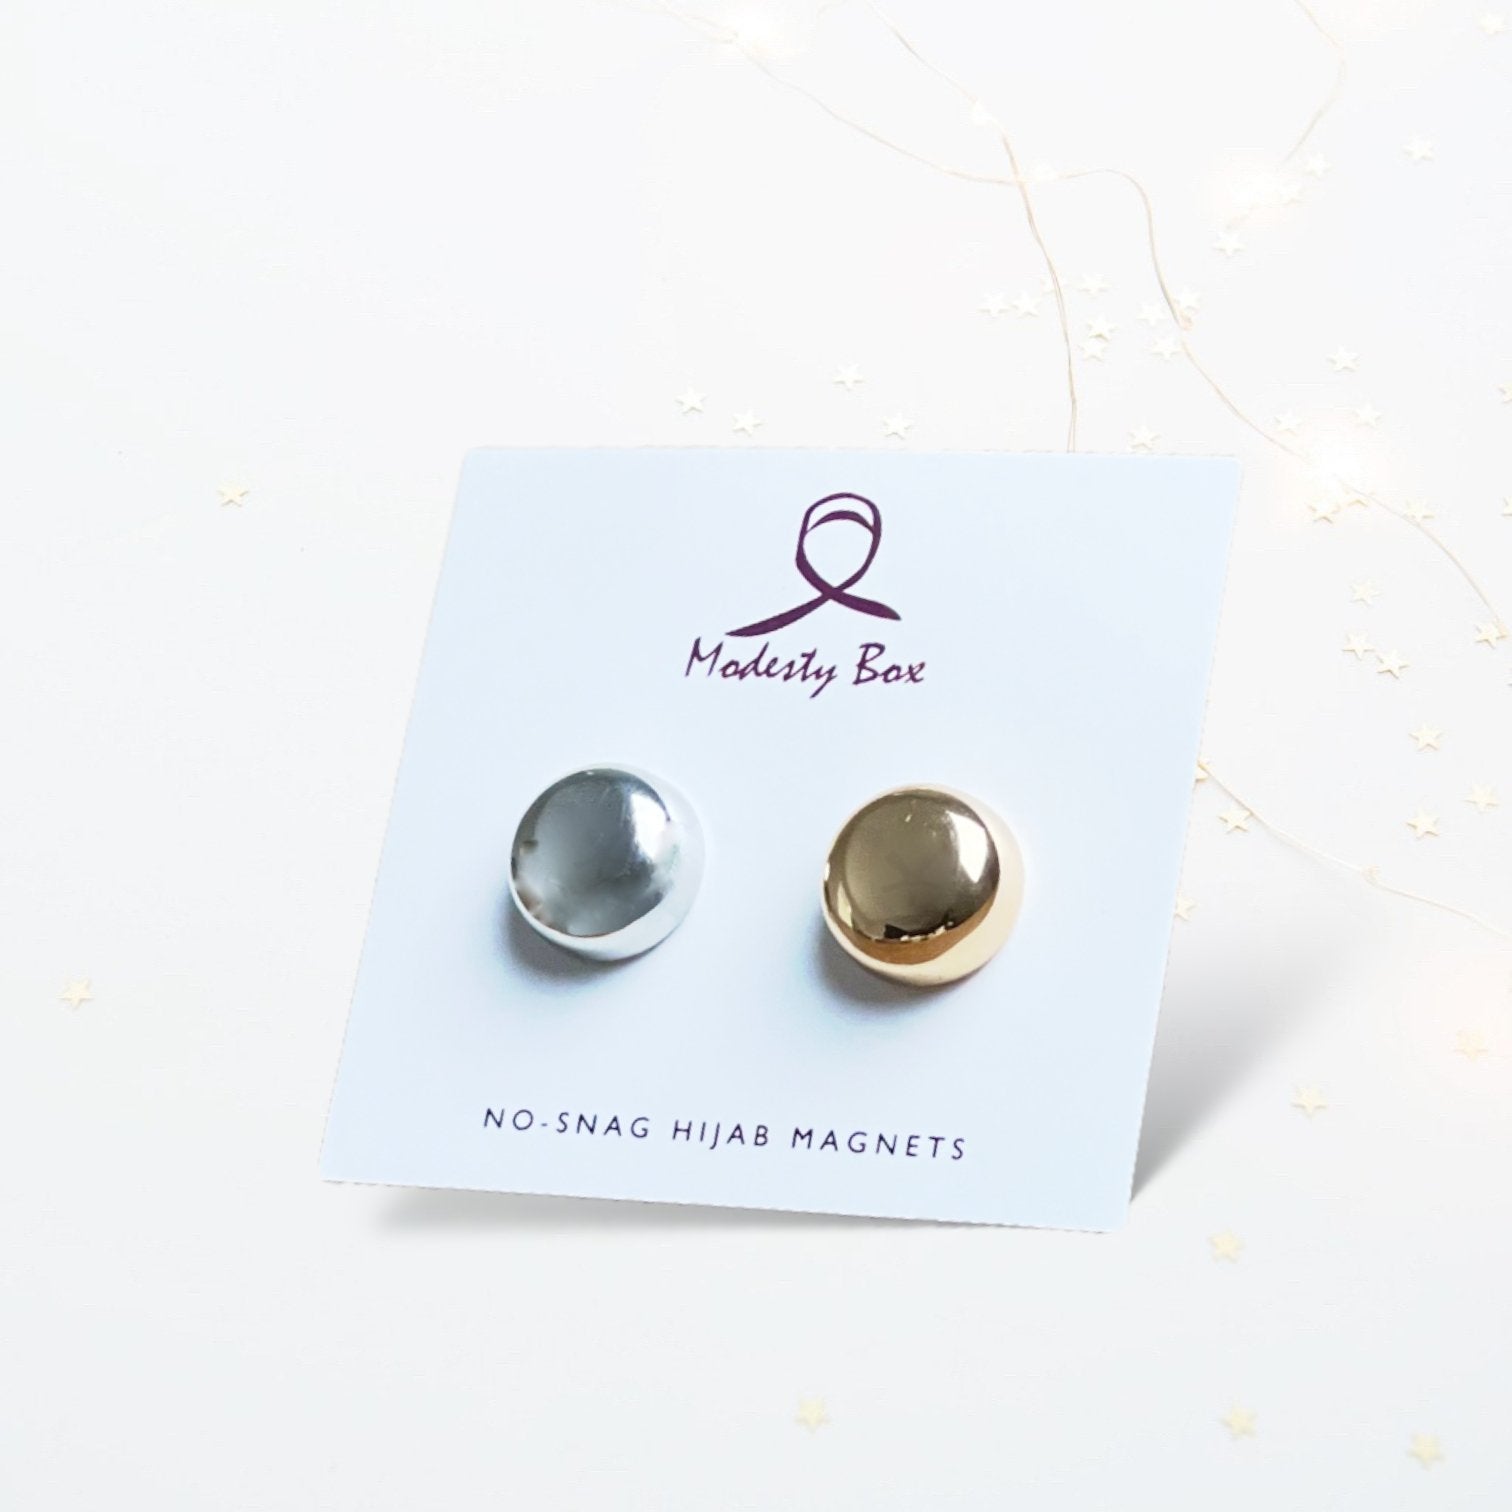 Metallic Hijab Magnet Pins - Basic - Modesty Box